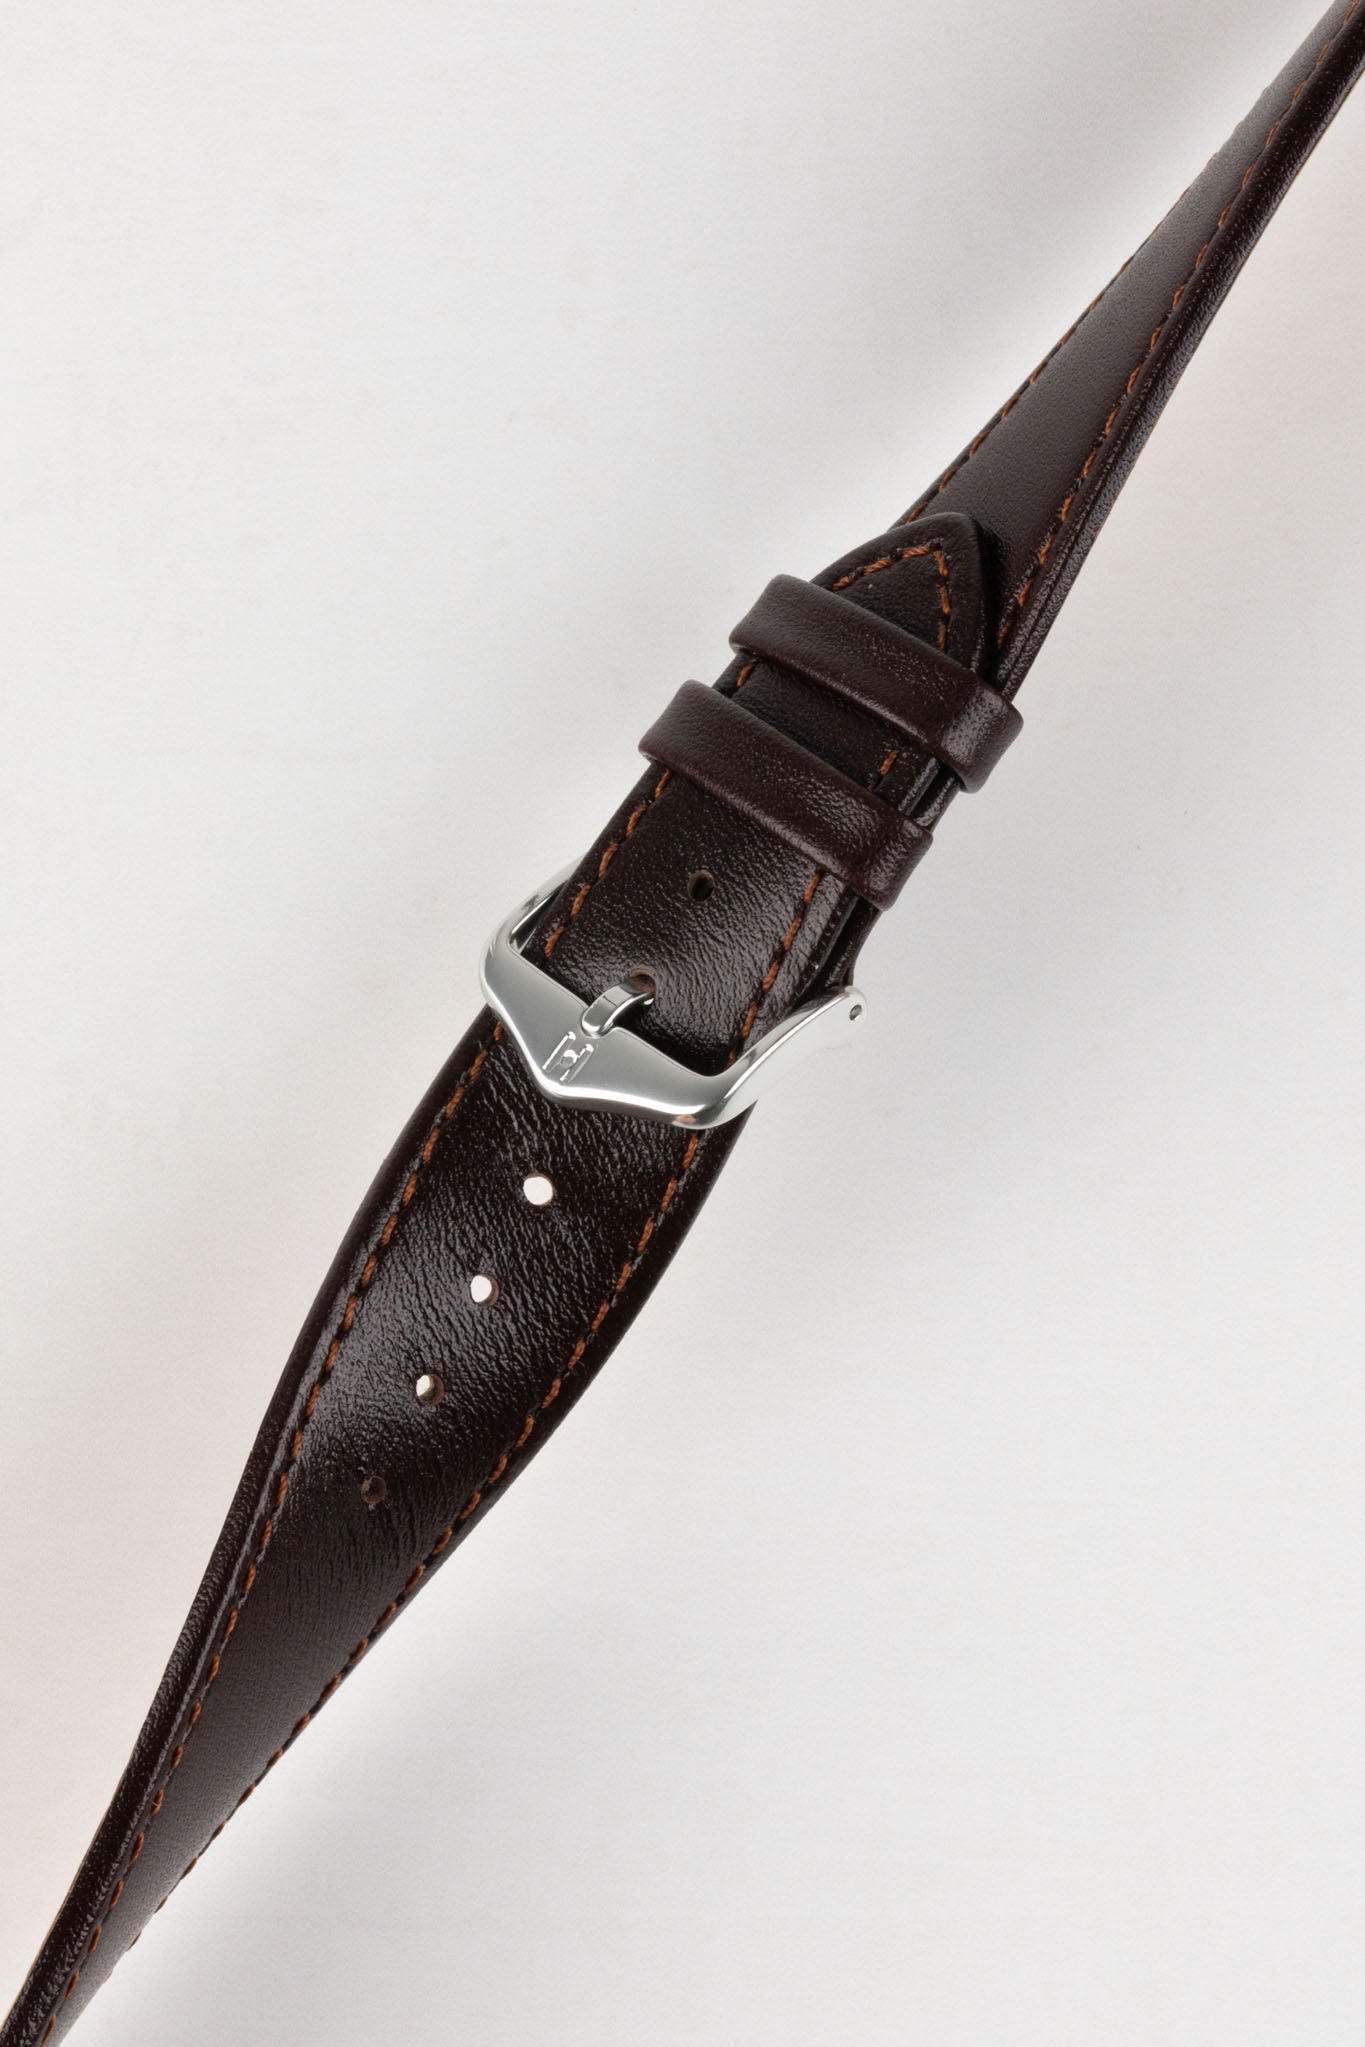 Hirsch OSIRIS Calf Leather Watch Strap in BROWN